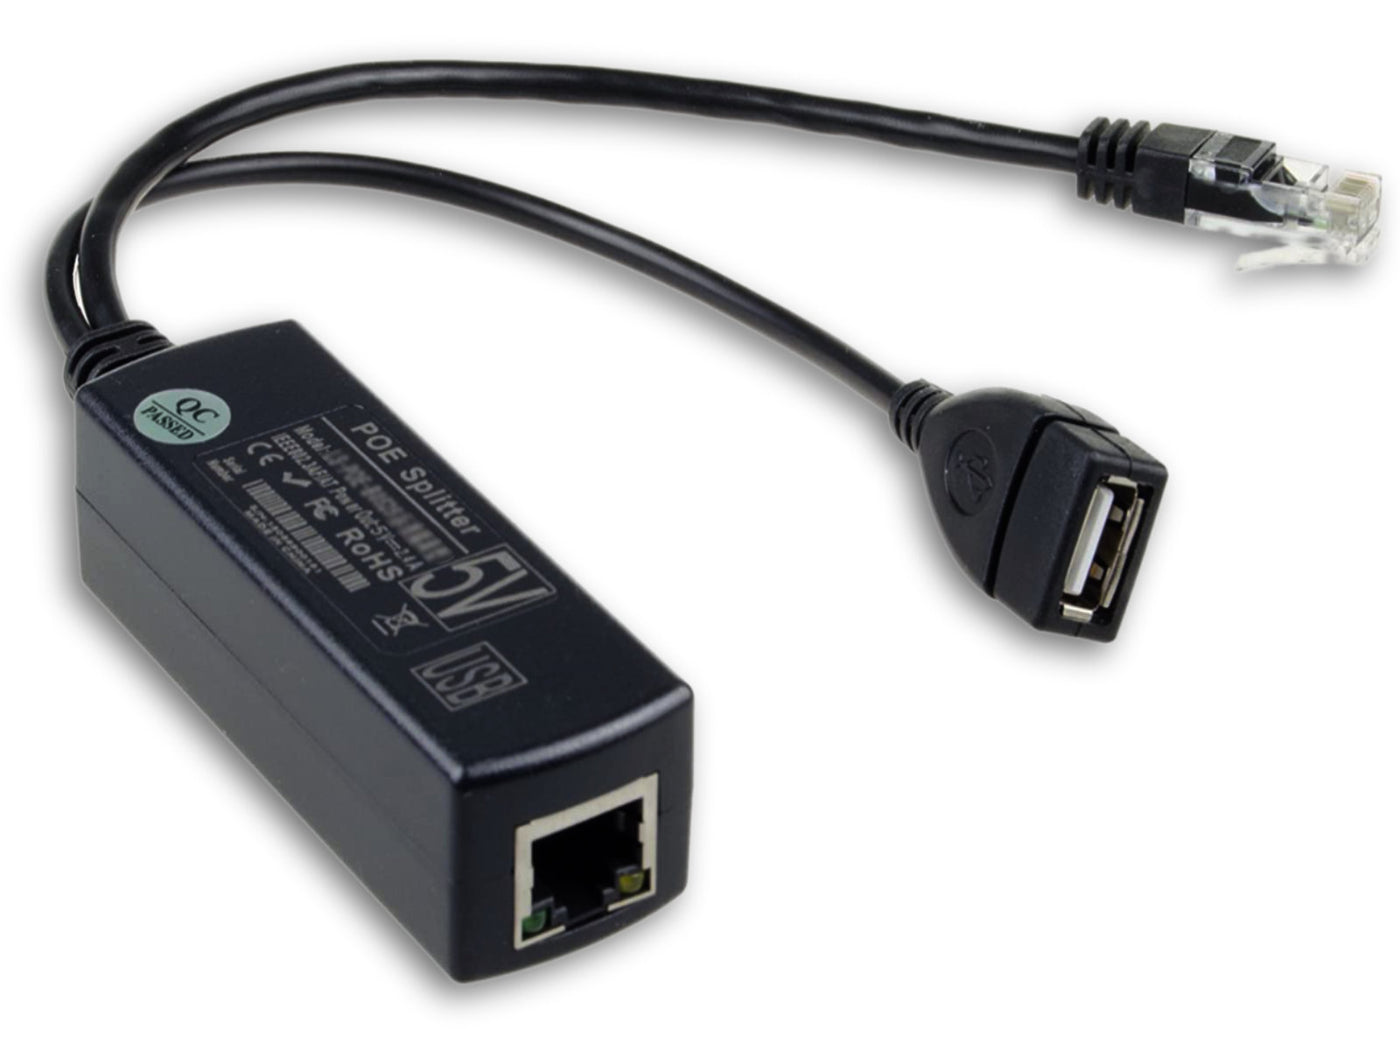 Cat5/6 USB Adapter – SimpliDock